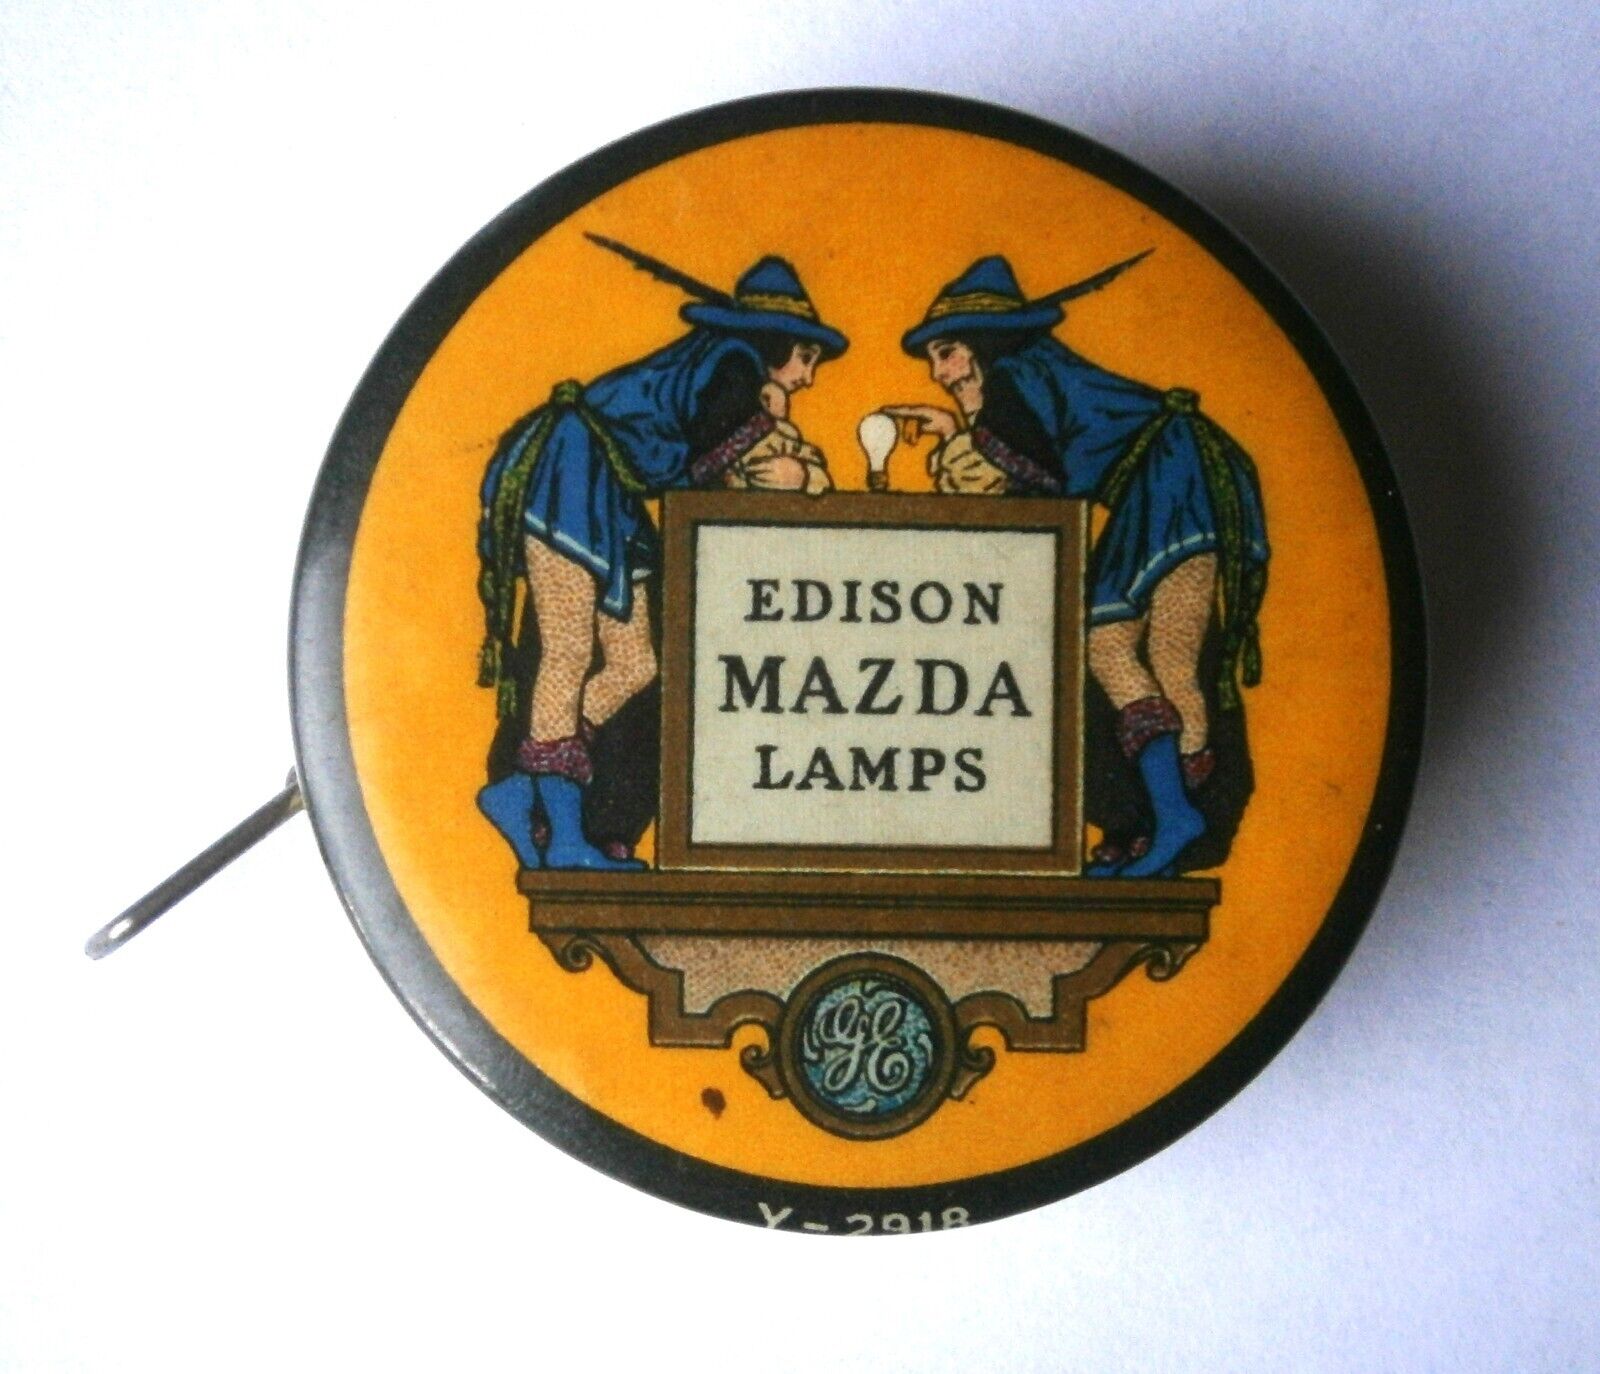 Edison Mazda Lamps Advertising Tape Measure designed by Maxfield Parish